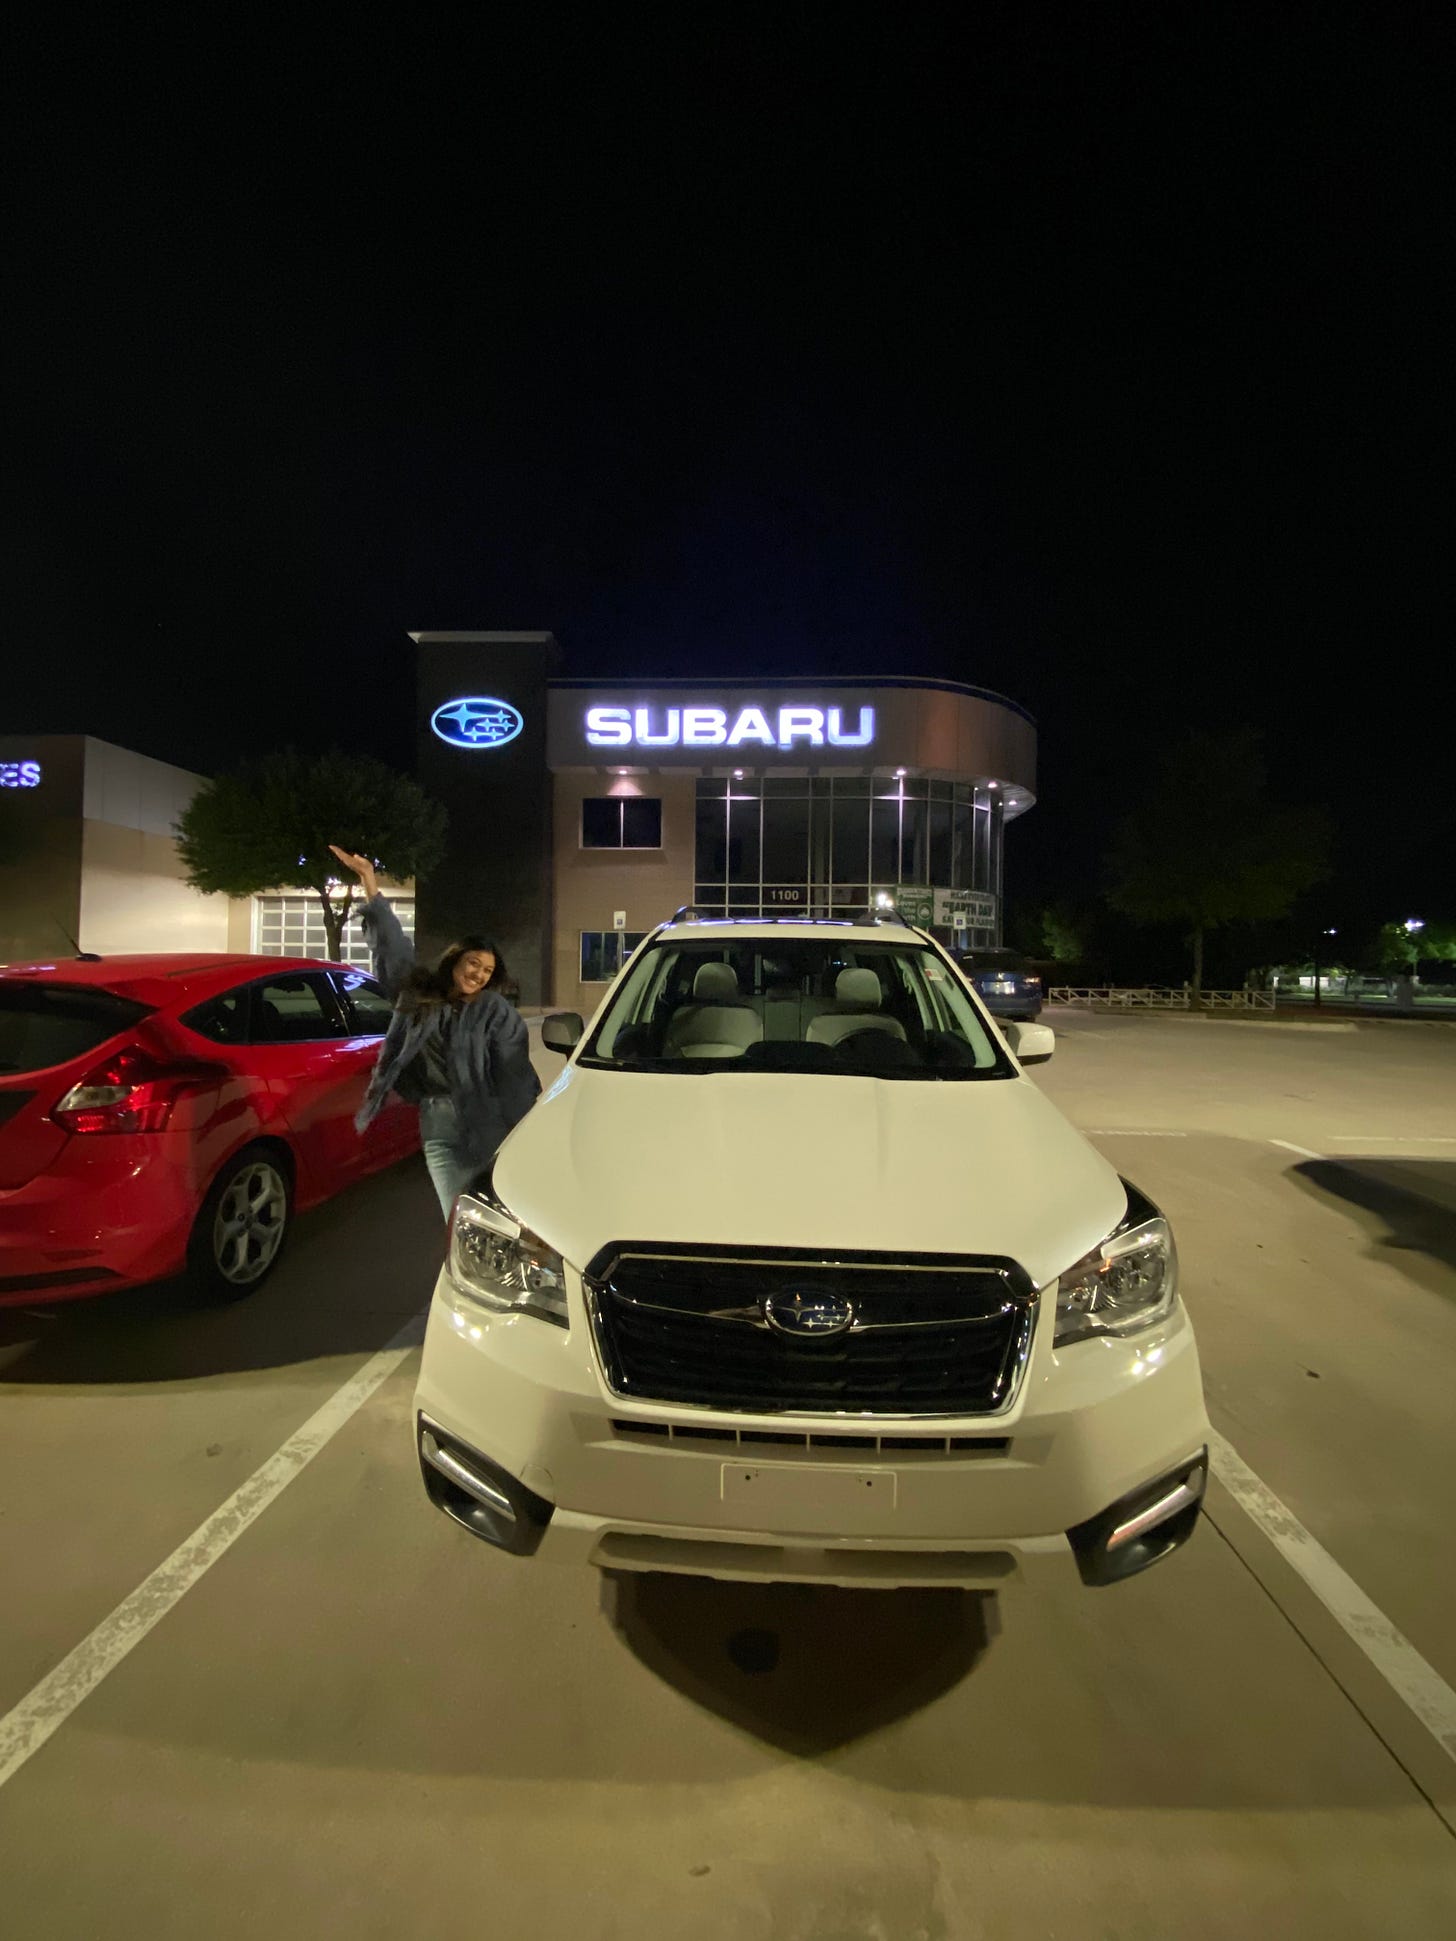 Sam poses next to her Subaru at the dealership